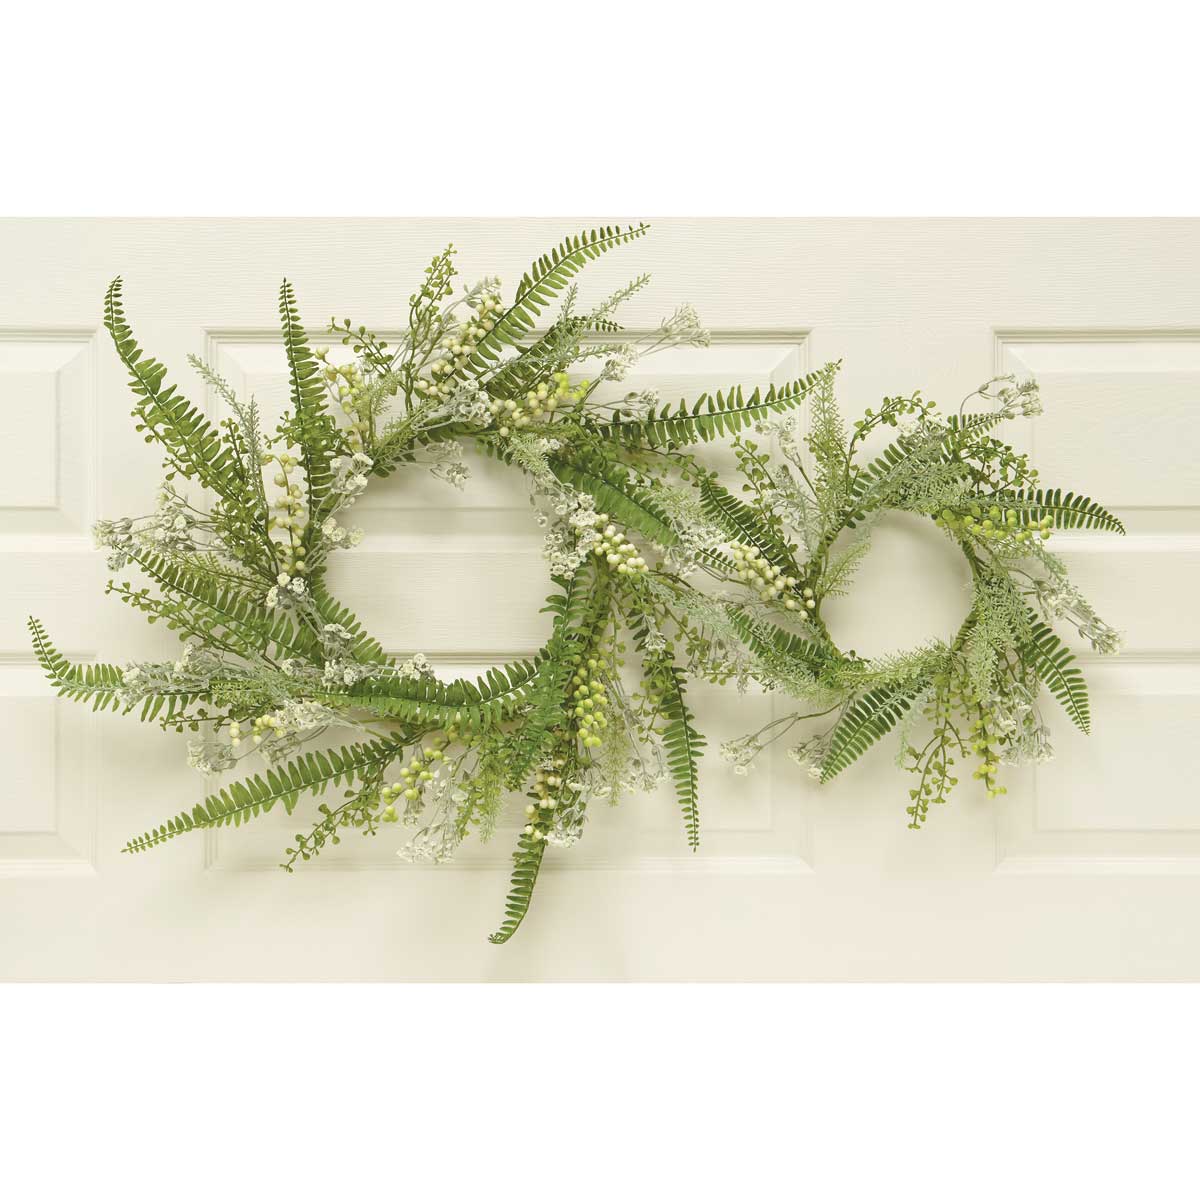 !Savannah Fern Wreath 31" (INNER RING 11.5")